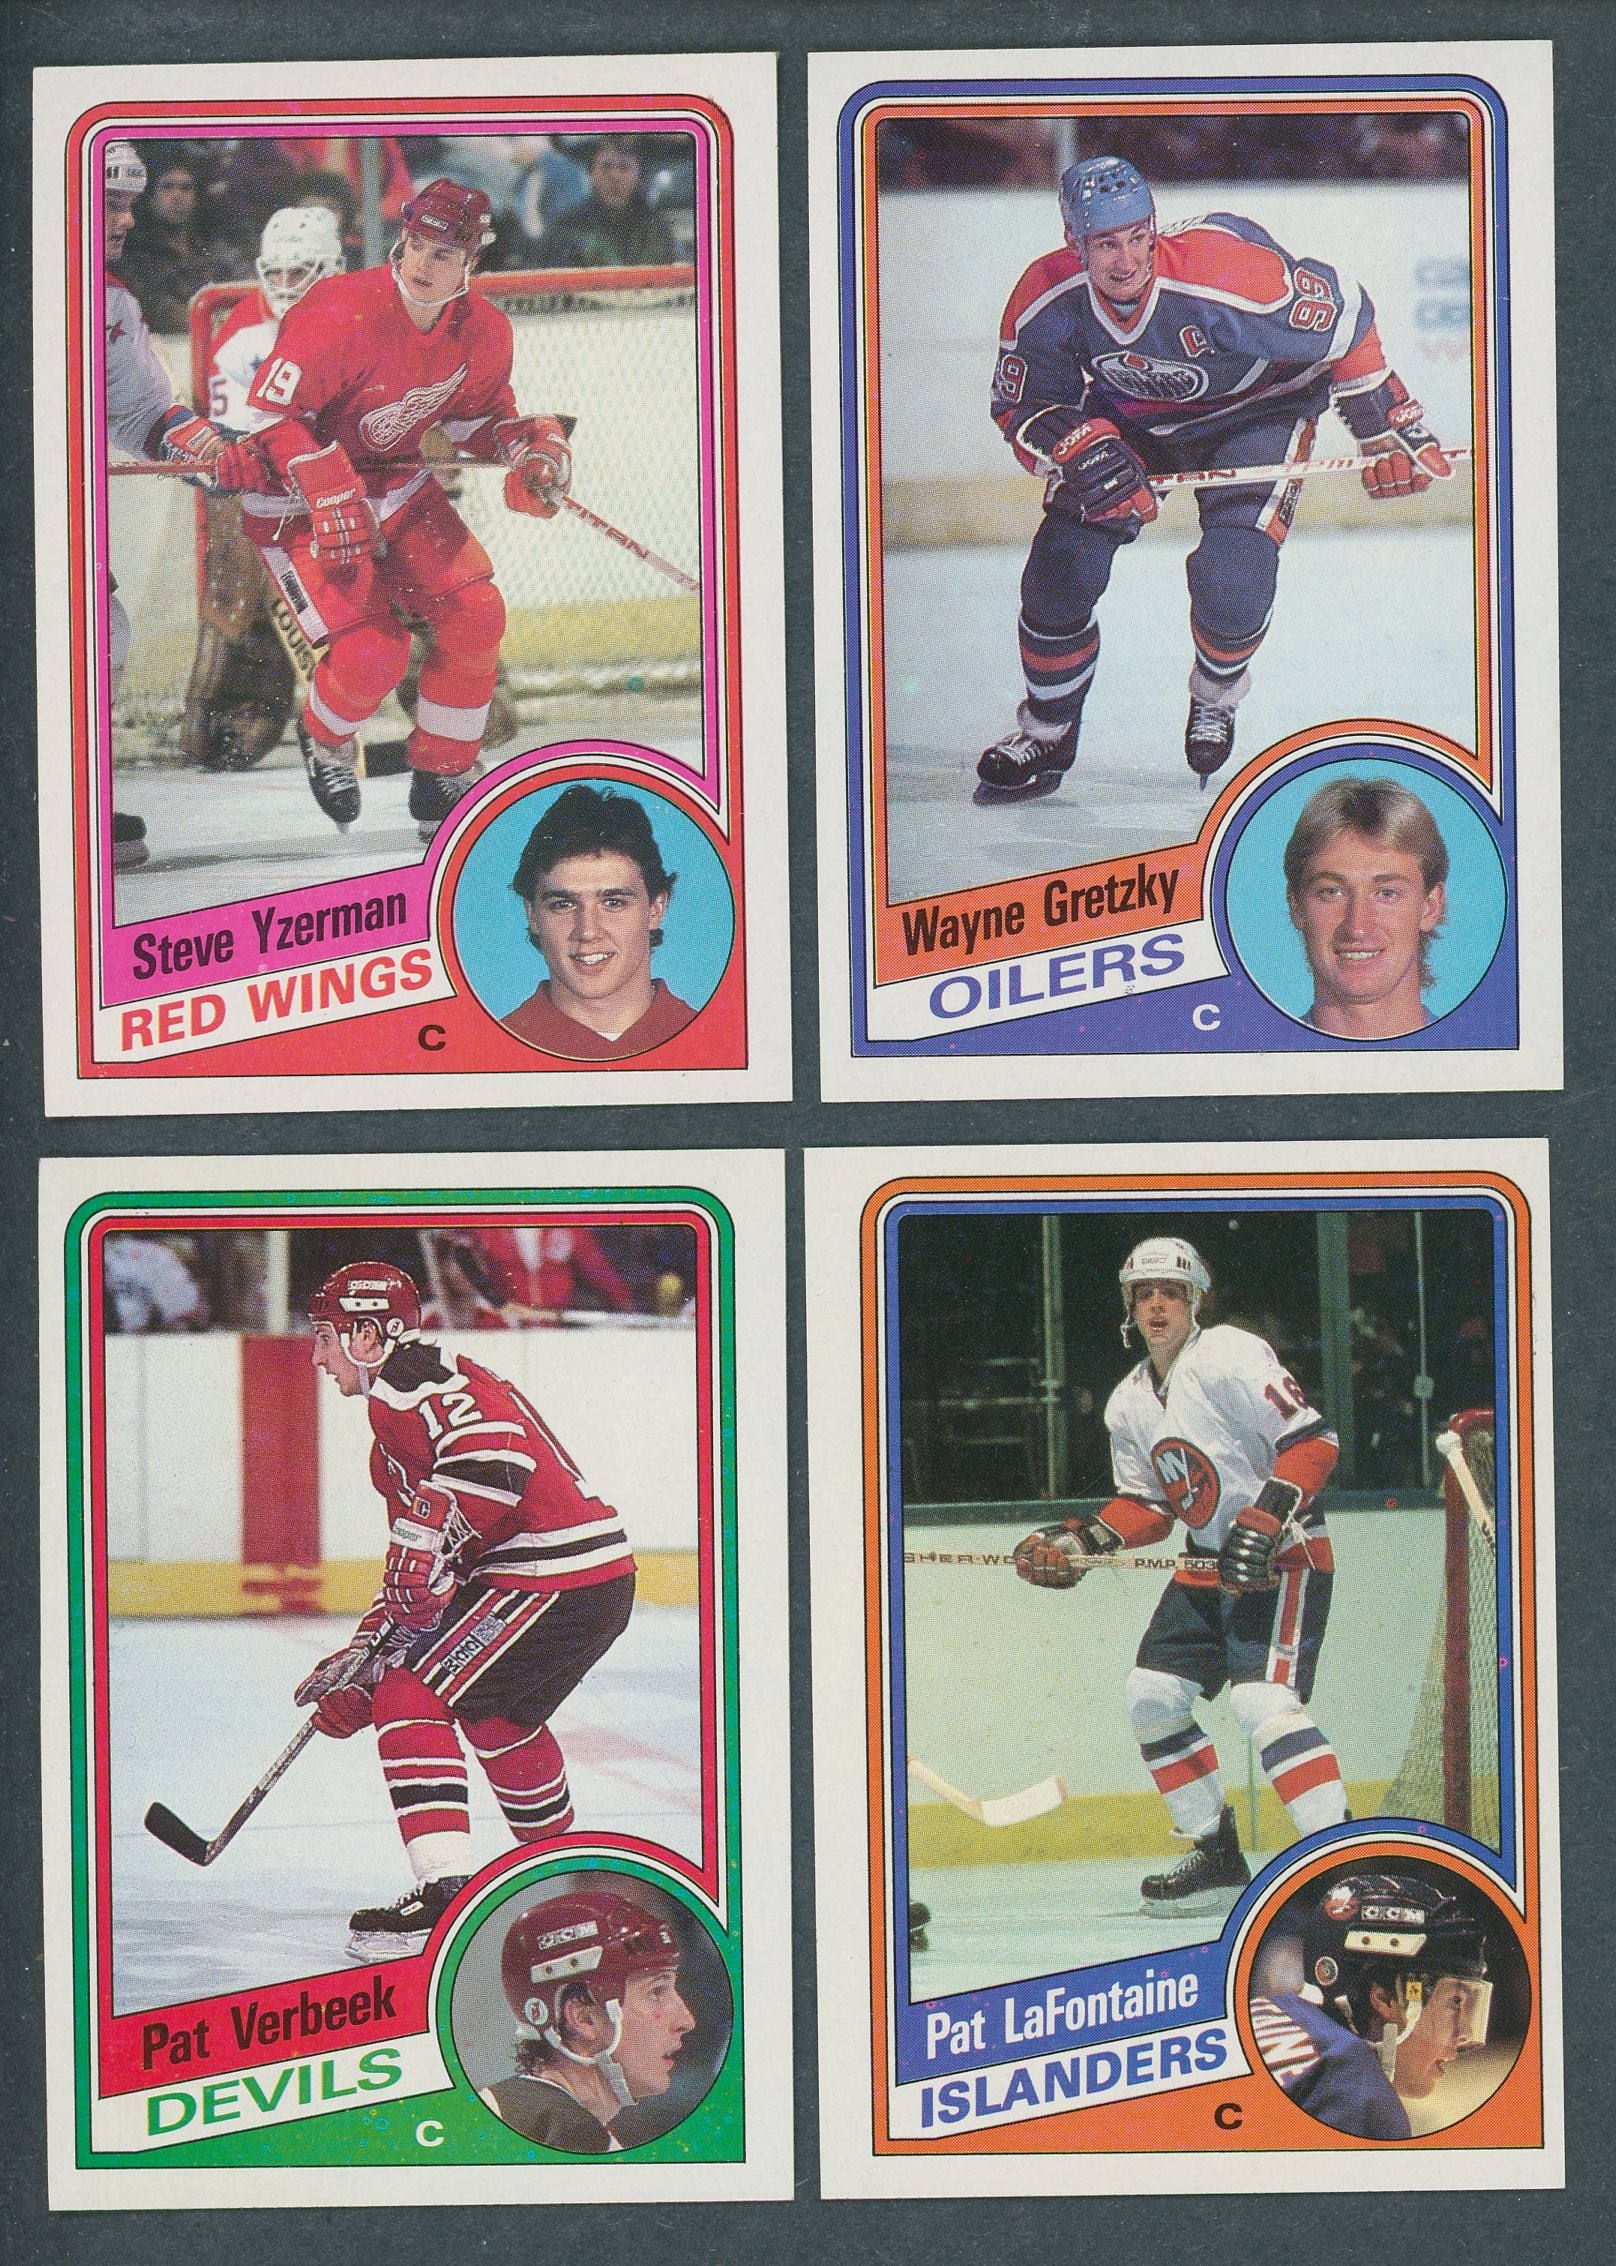 1984/85 Topps Hockey Complete Set NM NM/MT (165) (22-56)